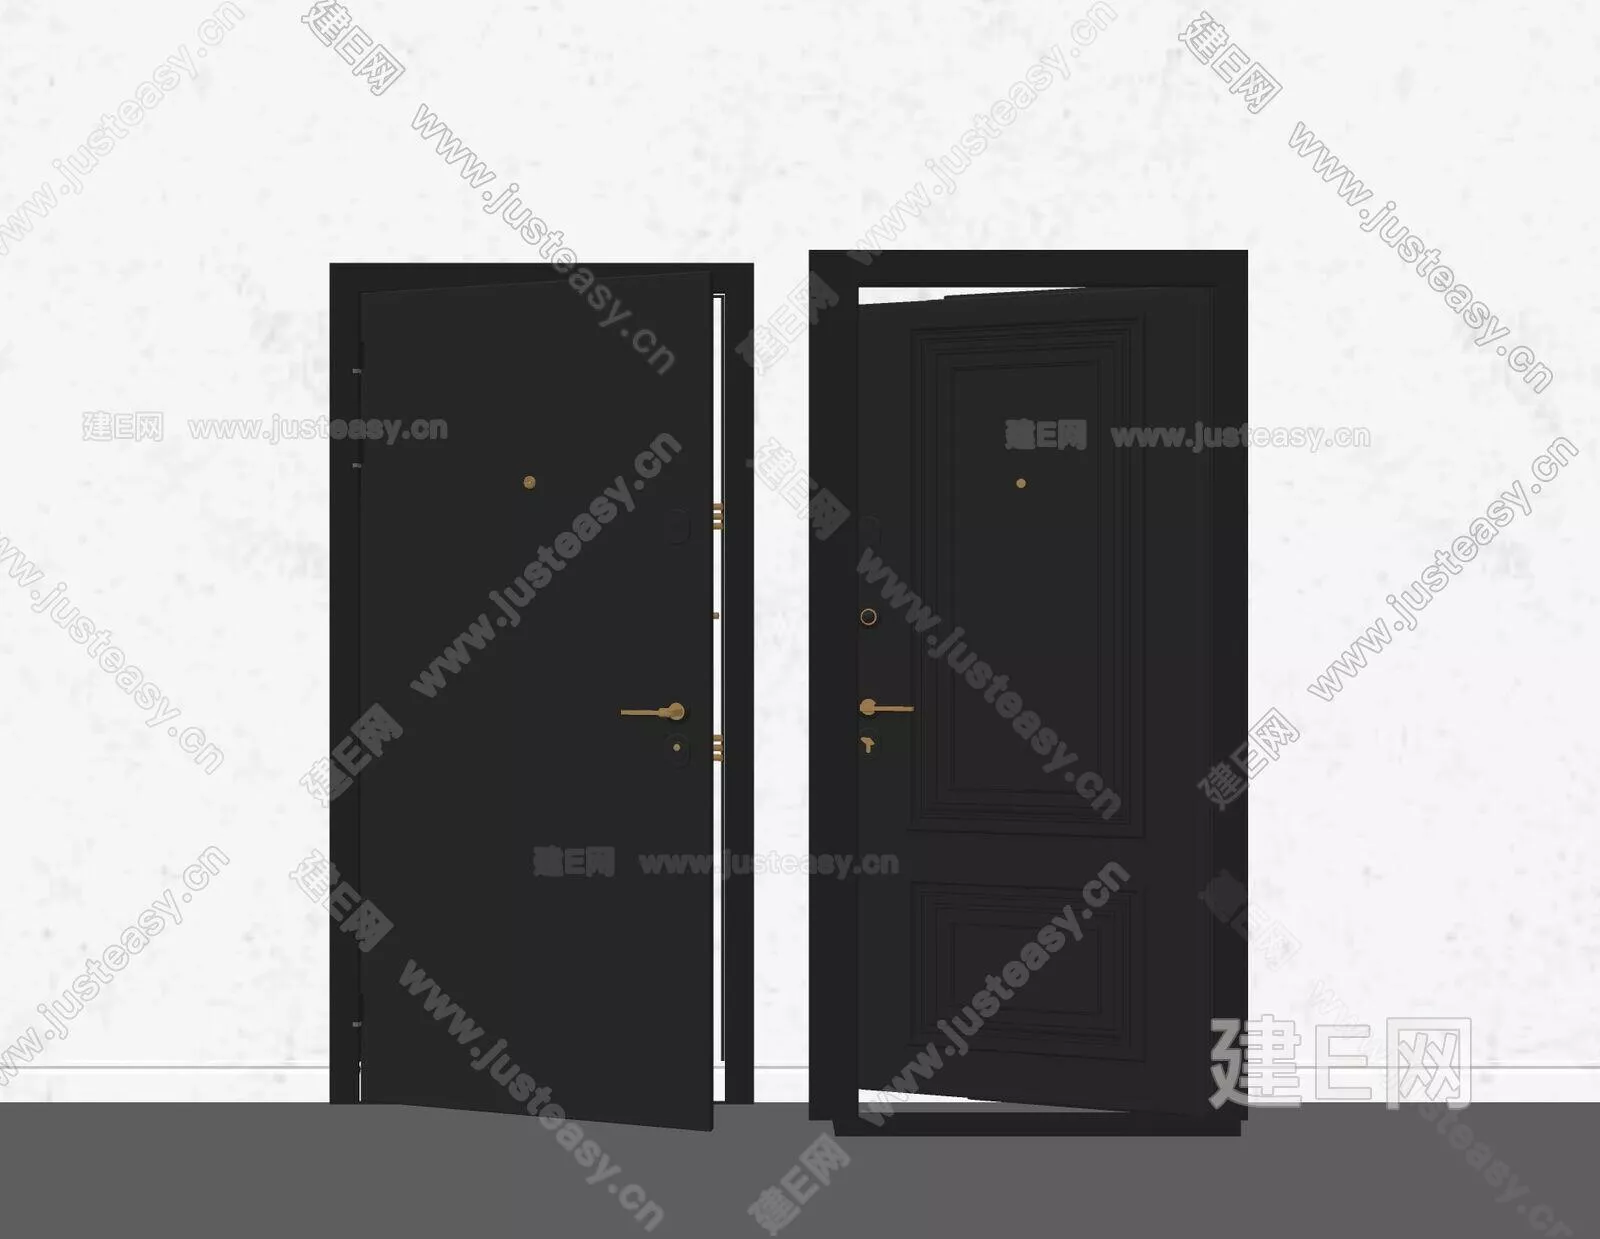 MODERN DOOR AND WINDOWS - SKETCHUP 3D MODEL - ENSCAPE - 109199368